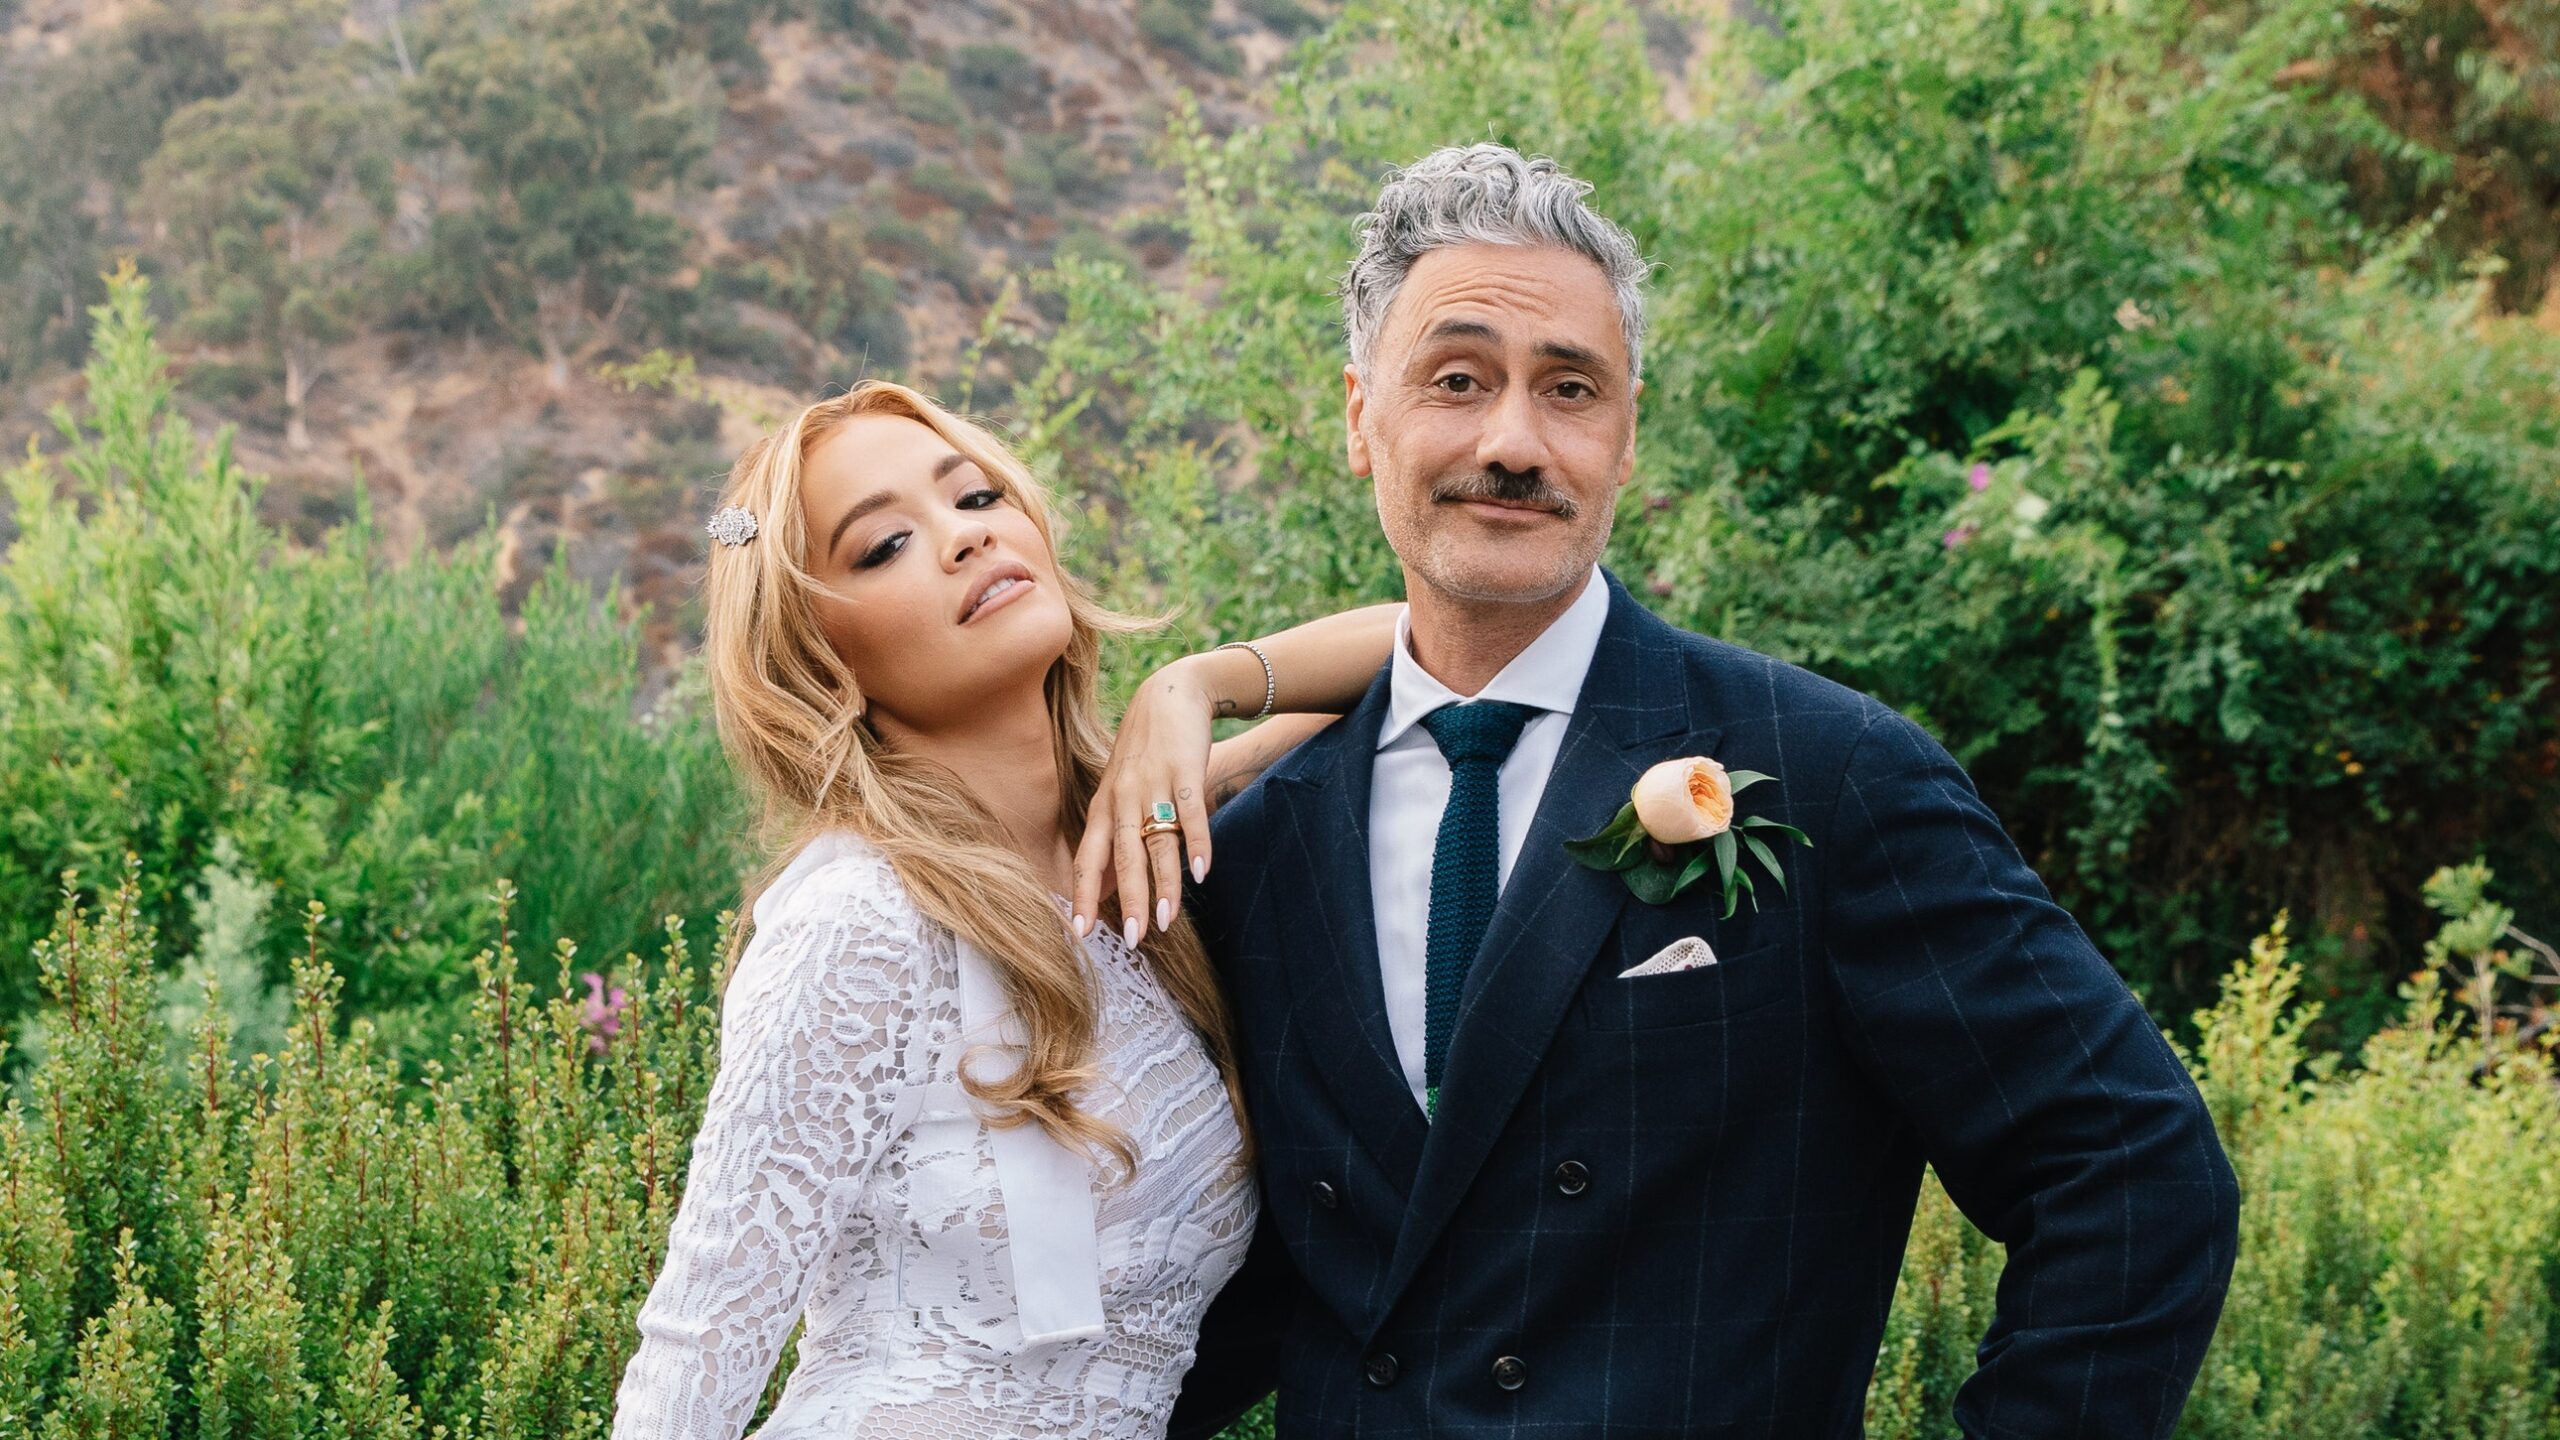 Rita Ora and Taika Waititi: Inside Their Secret Wedding Celebration! 12